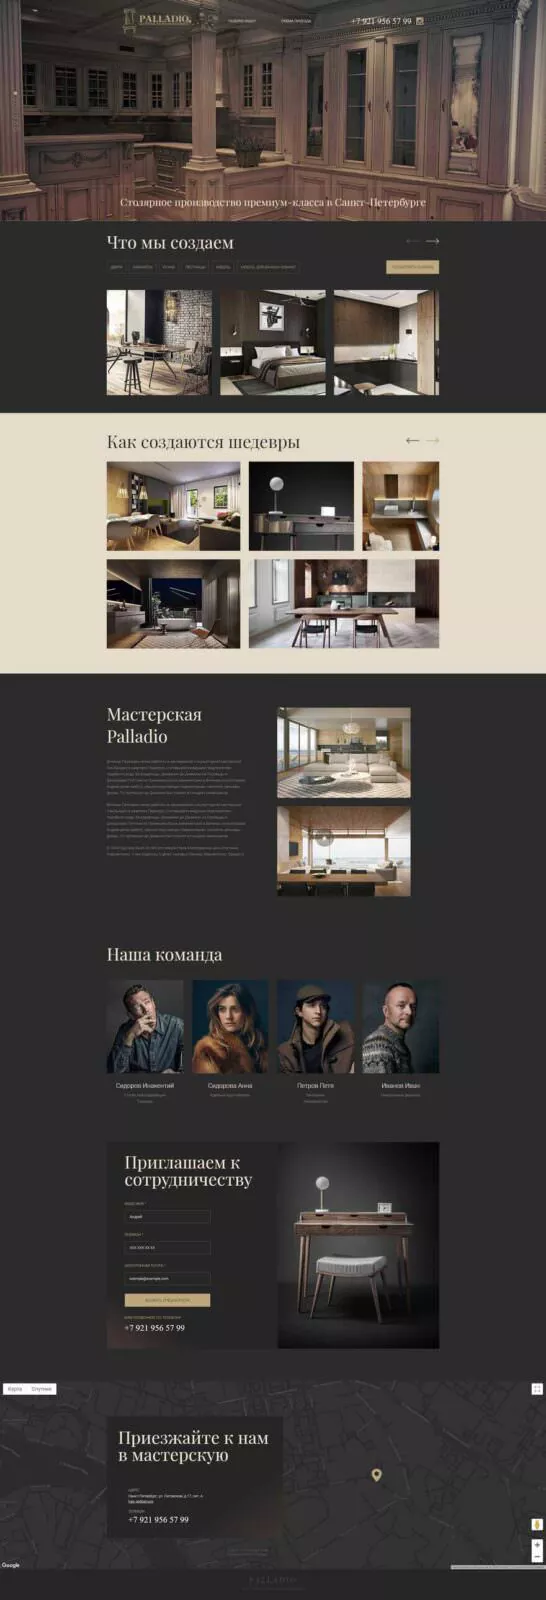 palladio.su  - Реклама мастерской эксклюзивной мебели